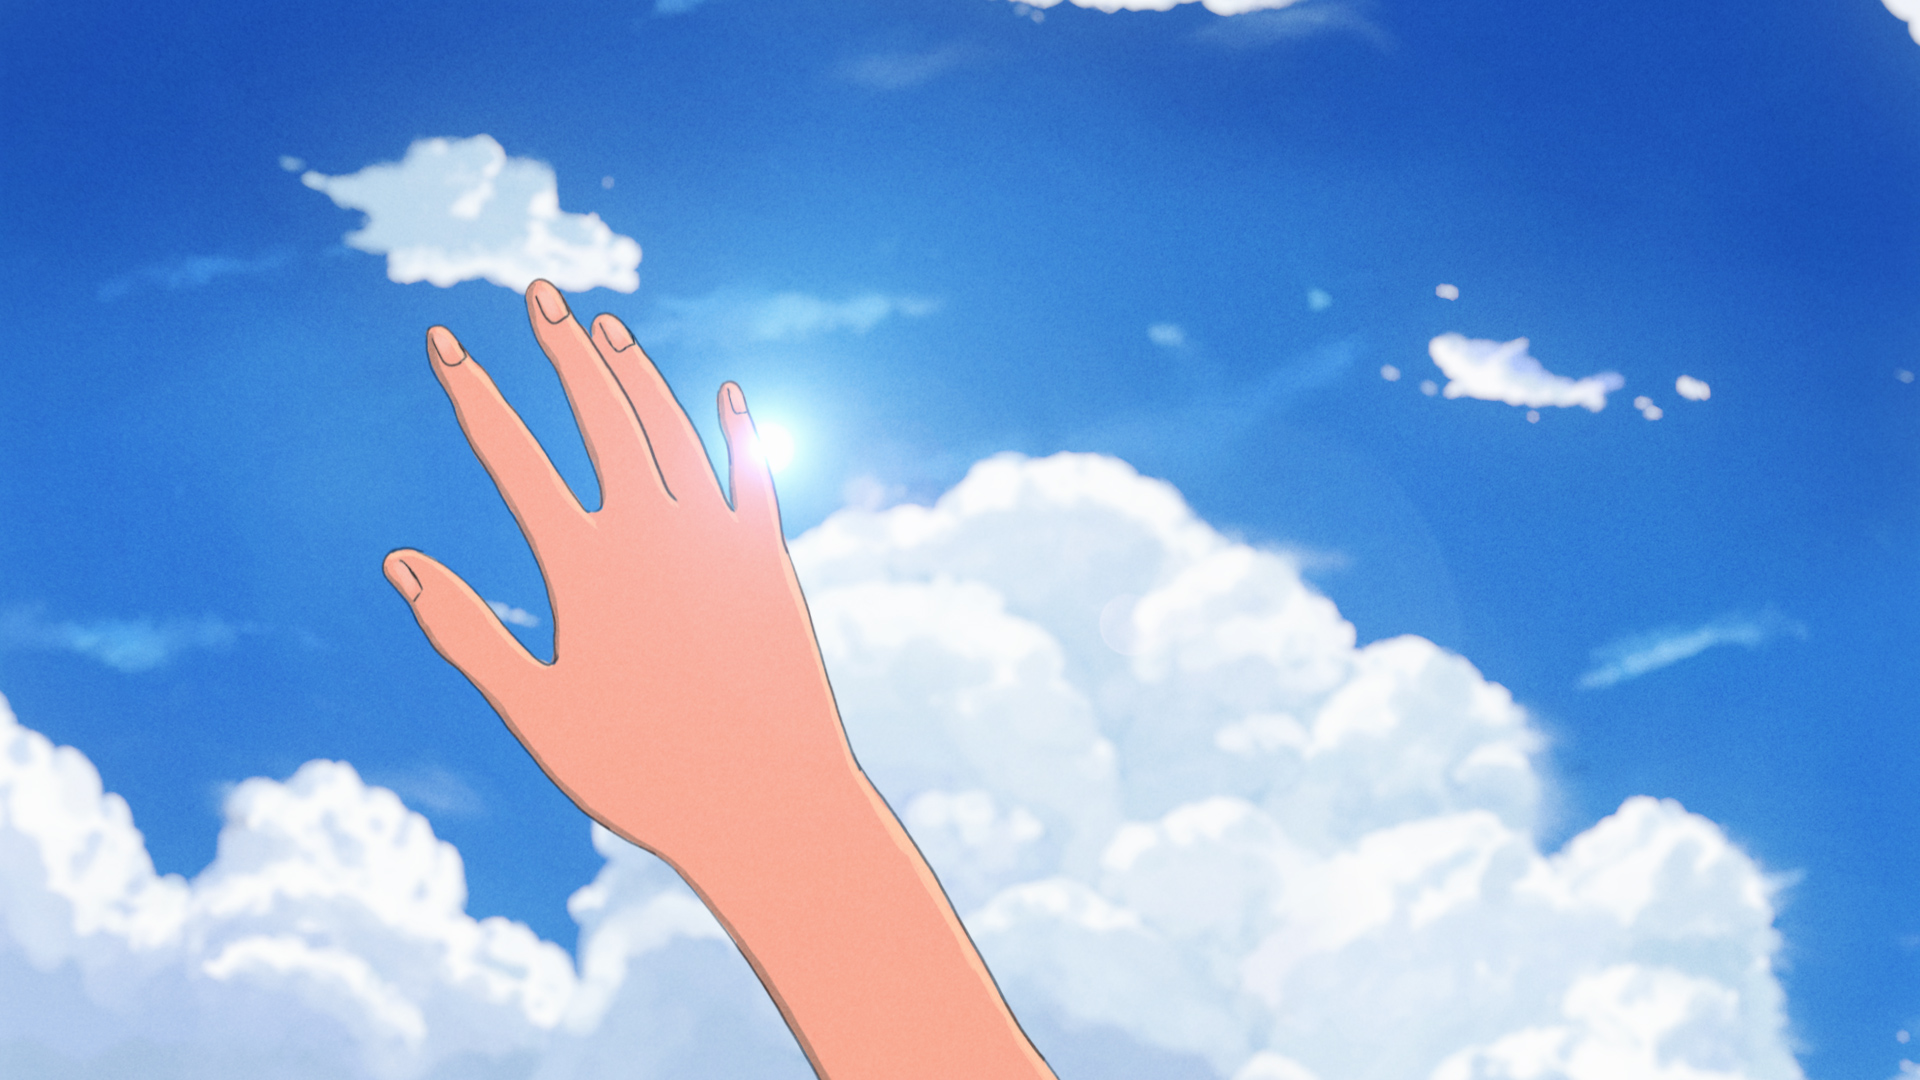 Sky Digital Art Nature Clouds Anime Hands 1920x1080